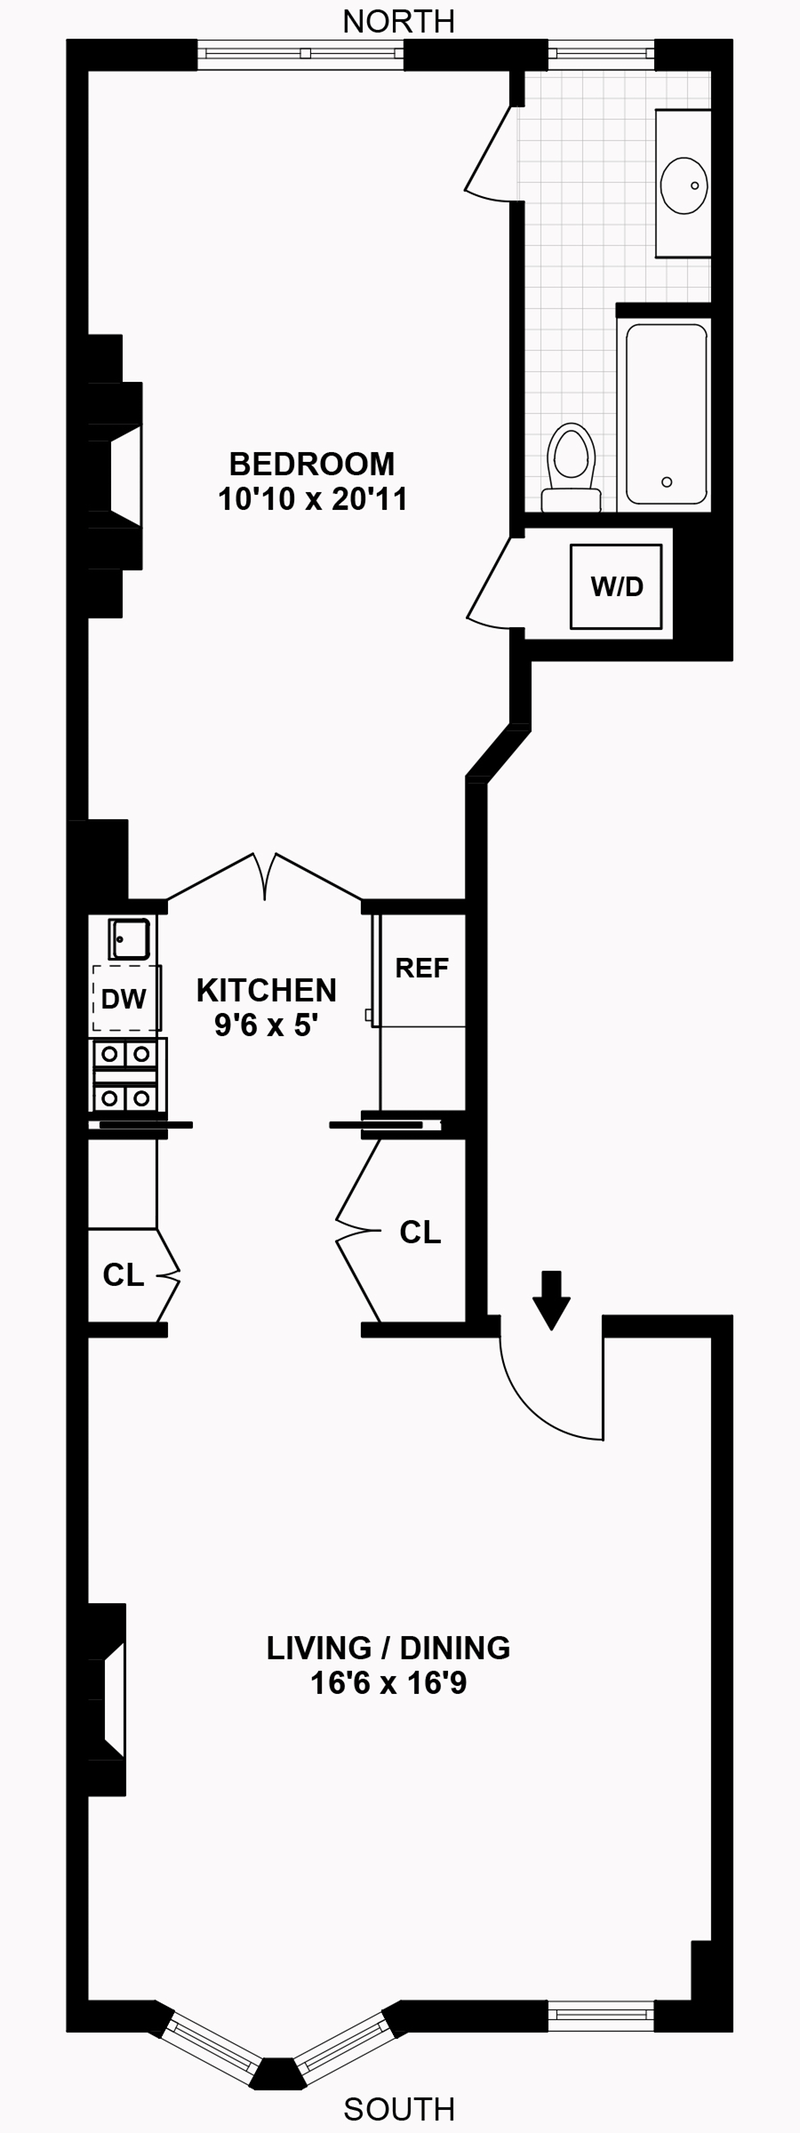 Floorplan for 319 West 138th Street, 2